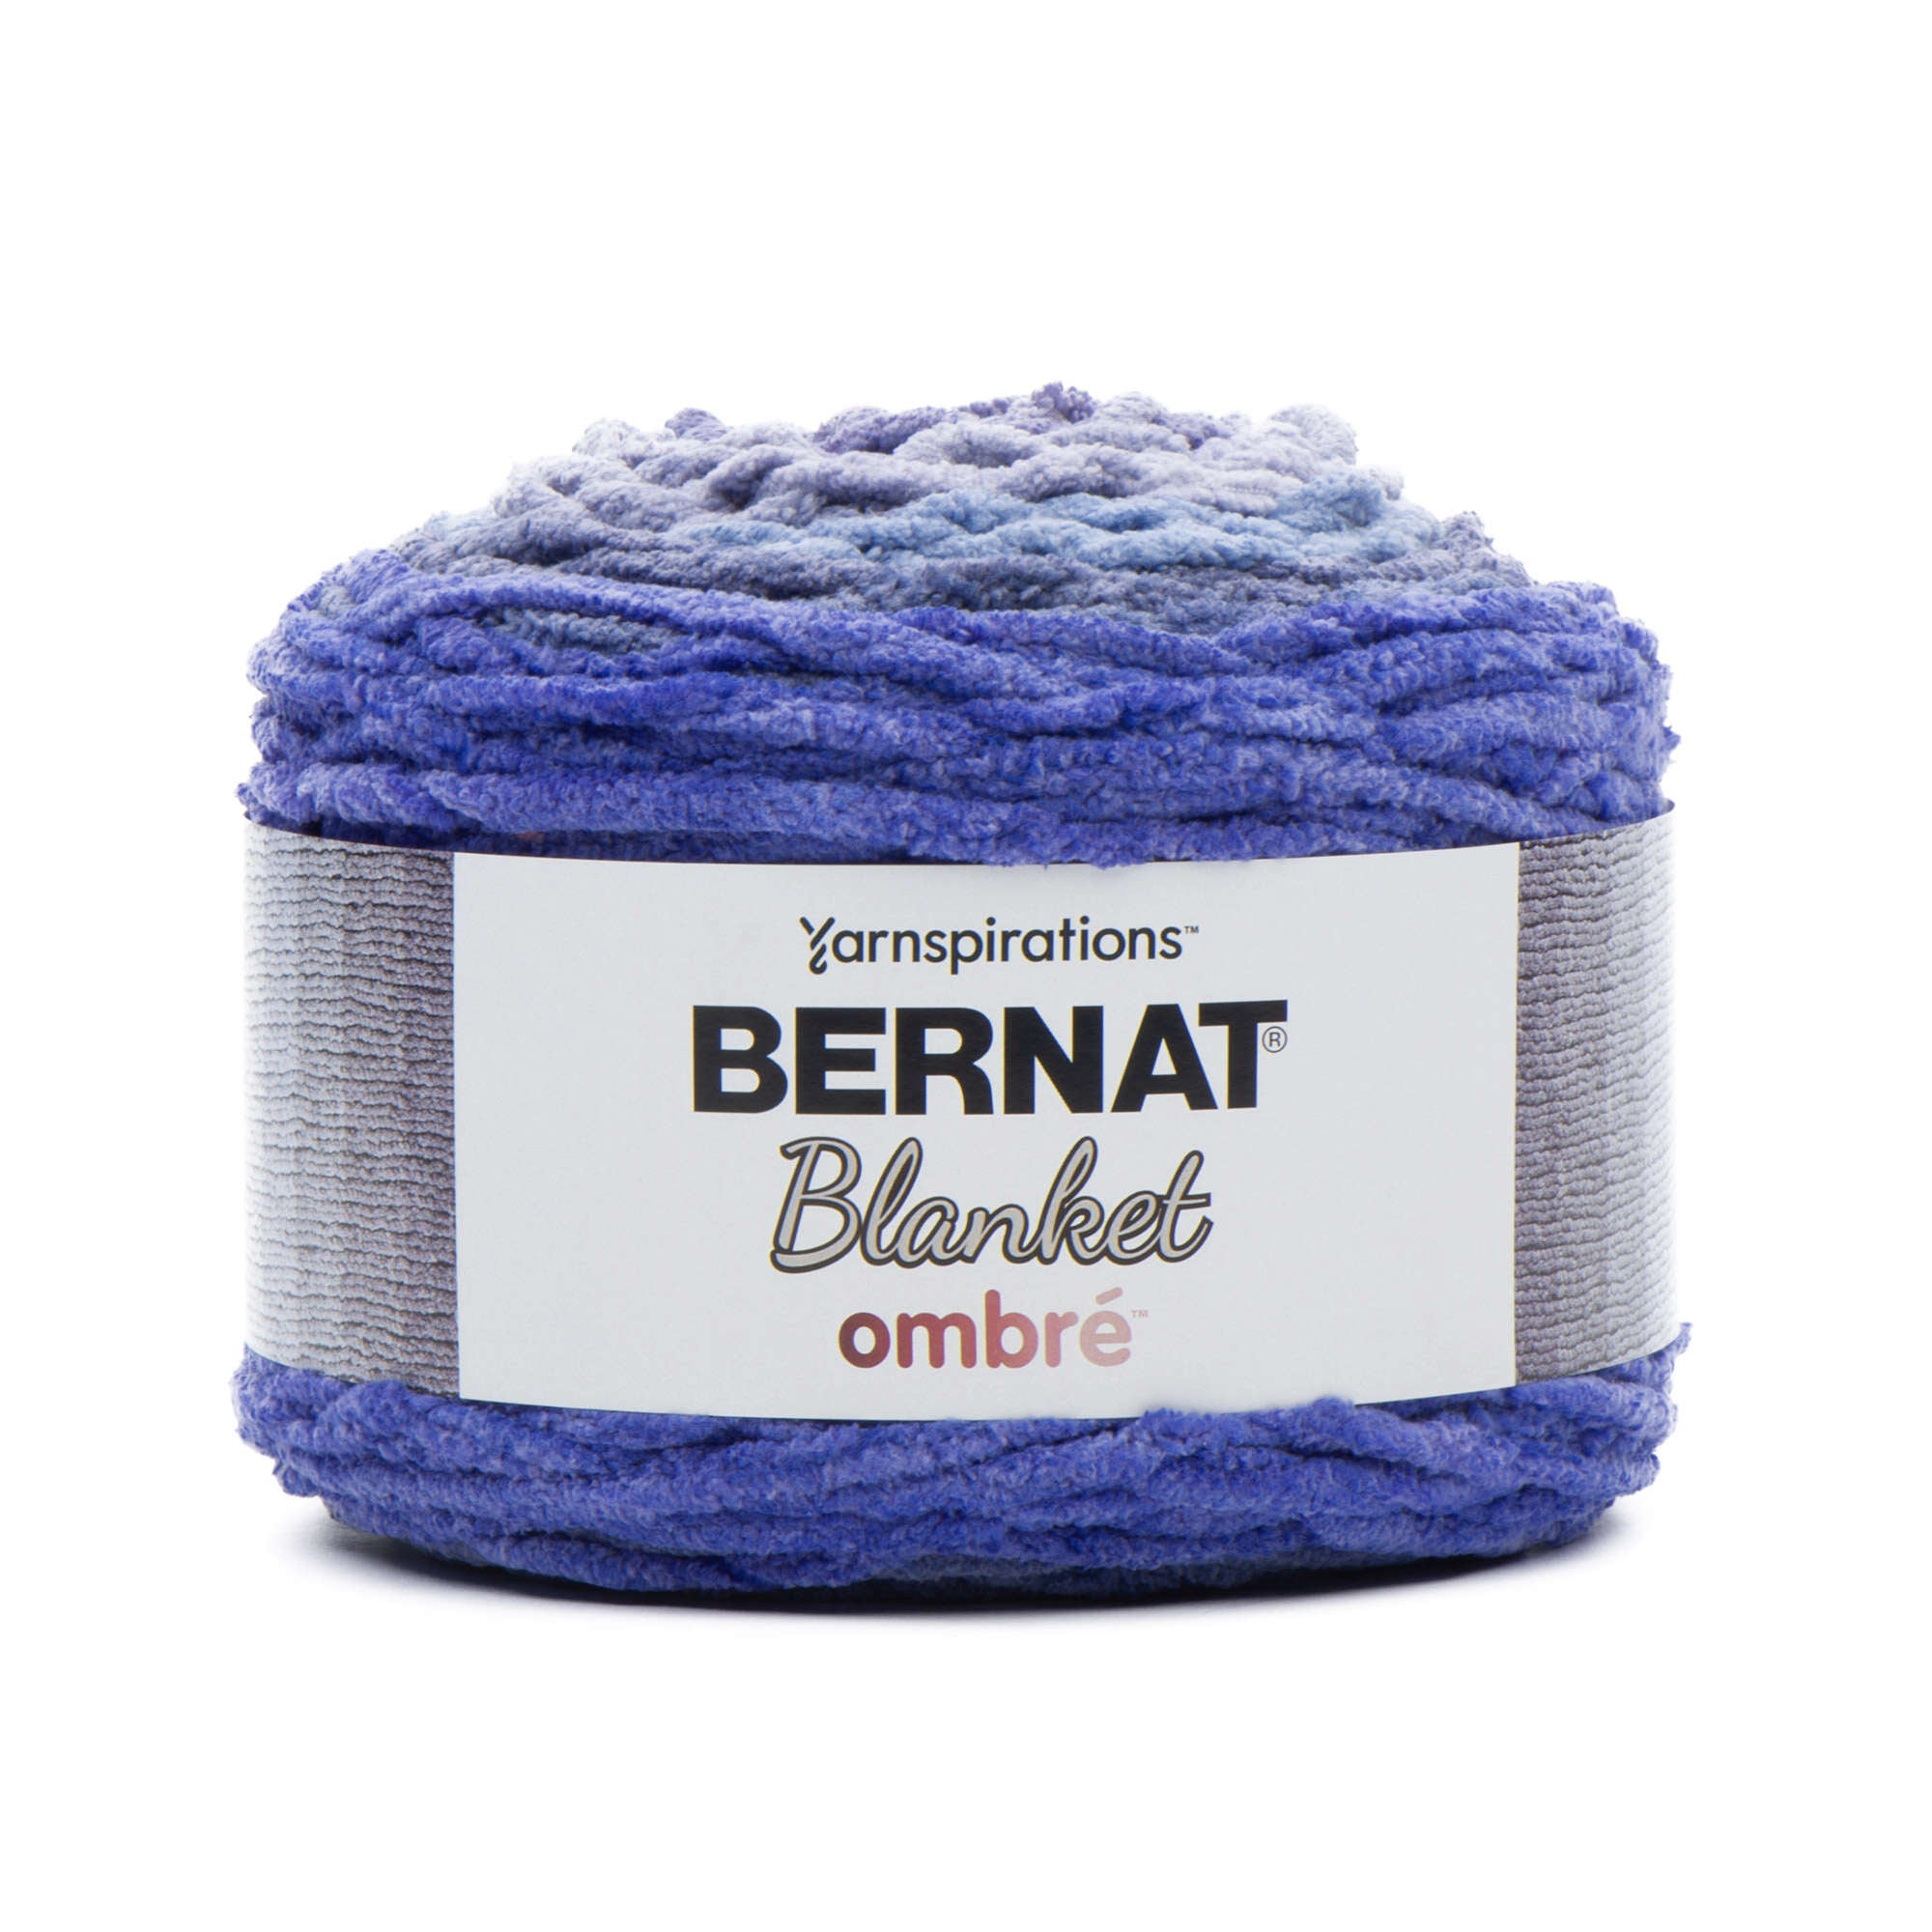 Bernat Blanket Ombres Yarn (300g/10.5oz) - Discontinued Shades